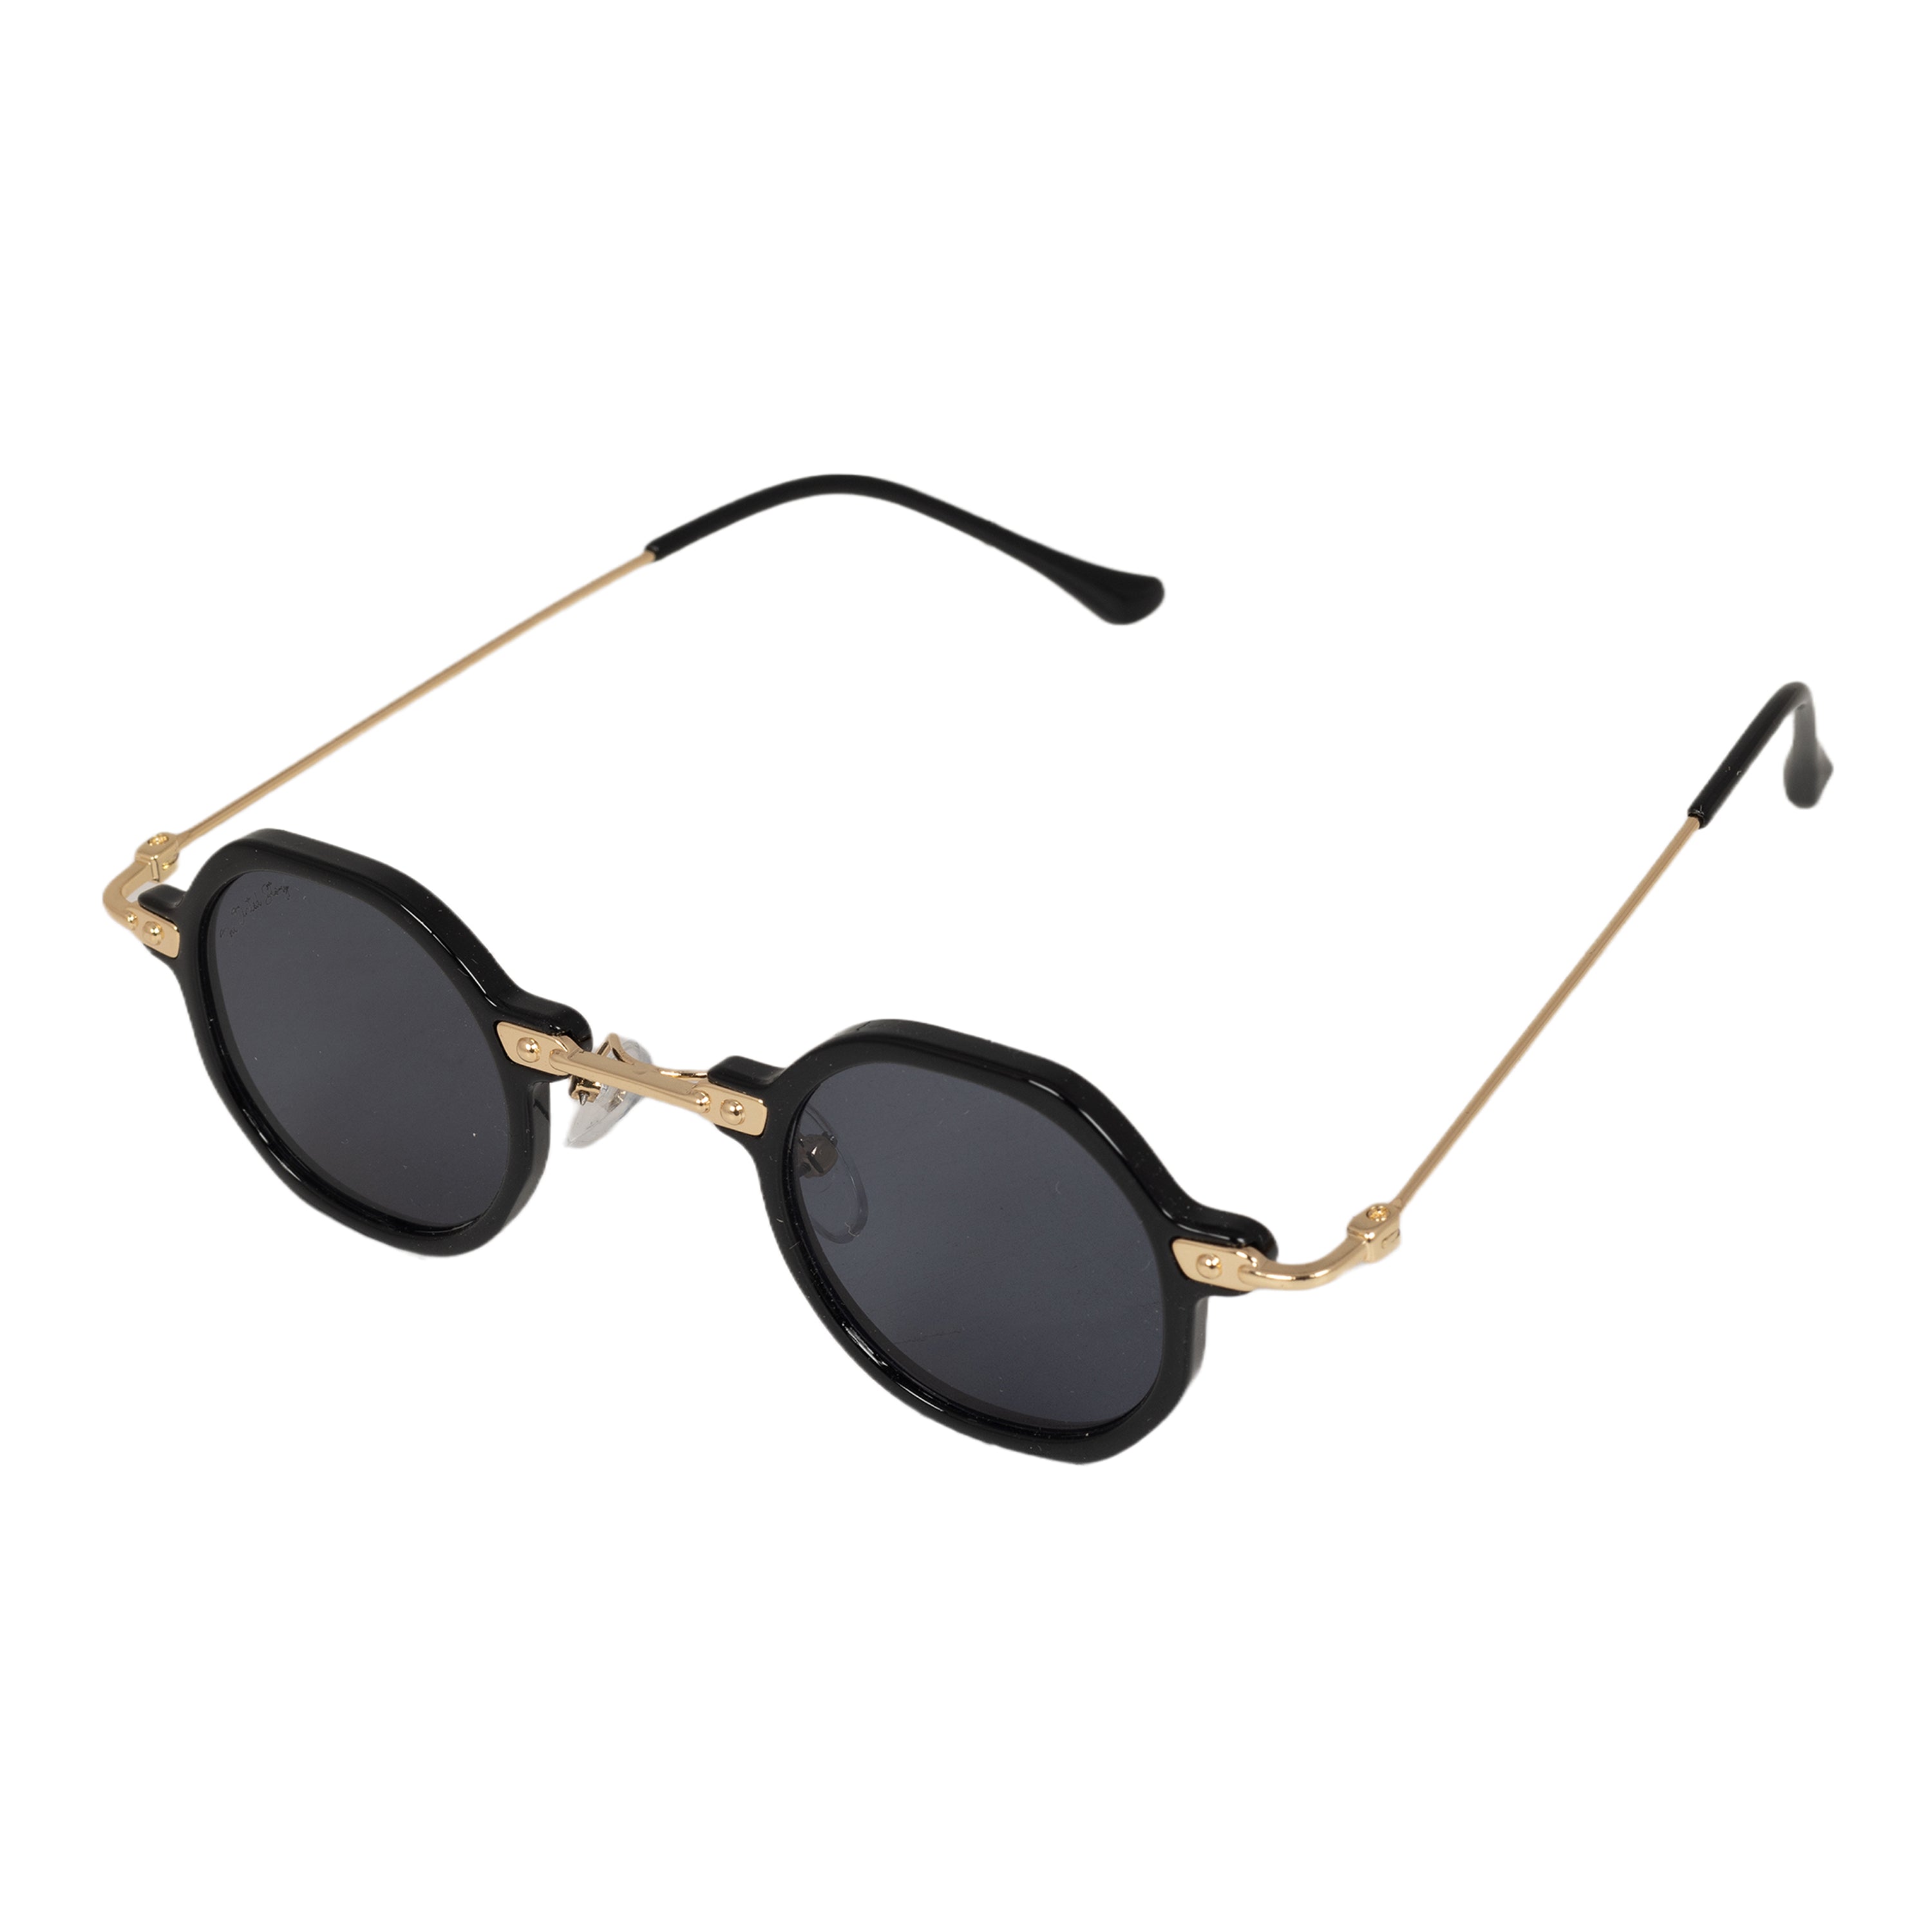 Alphino Oval Sunglasses